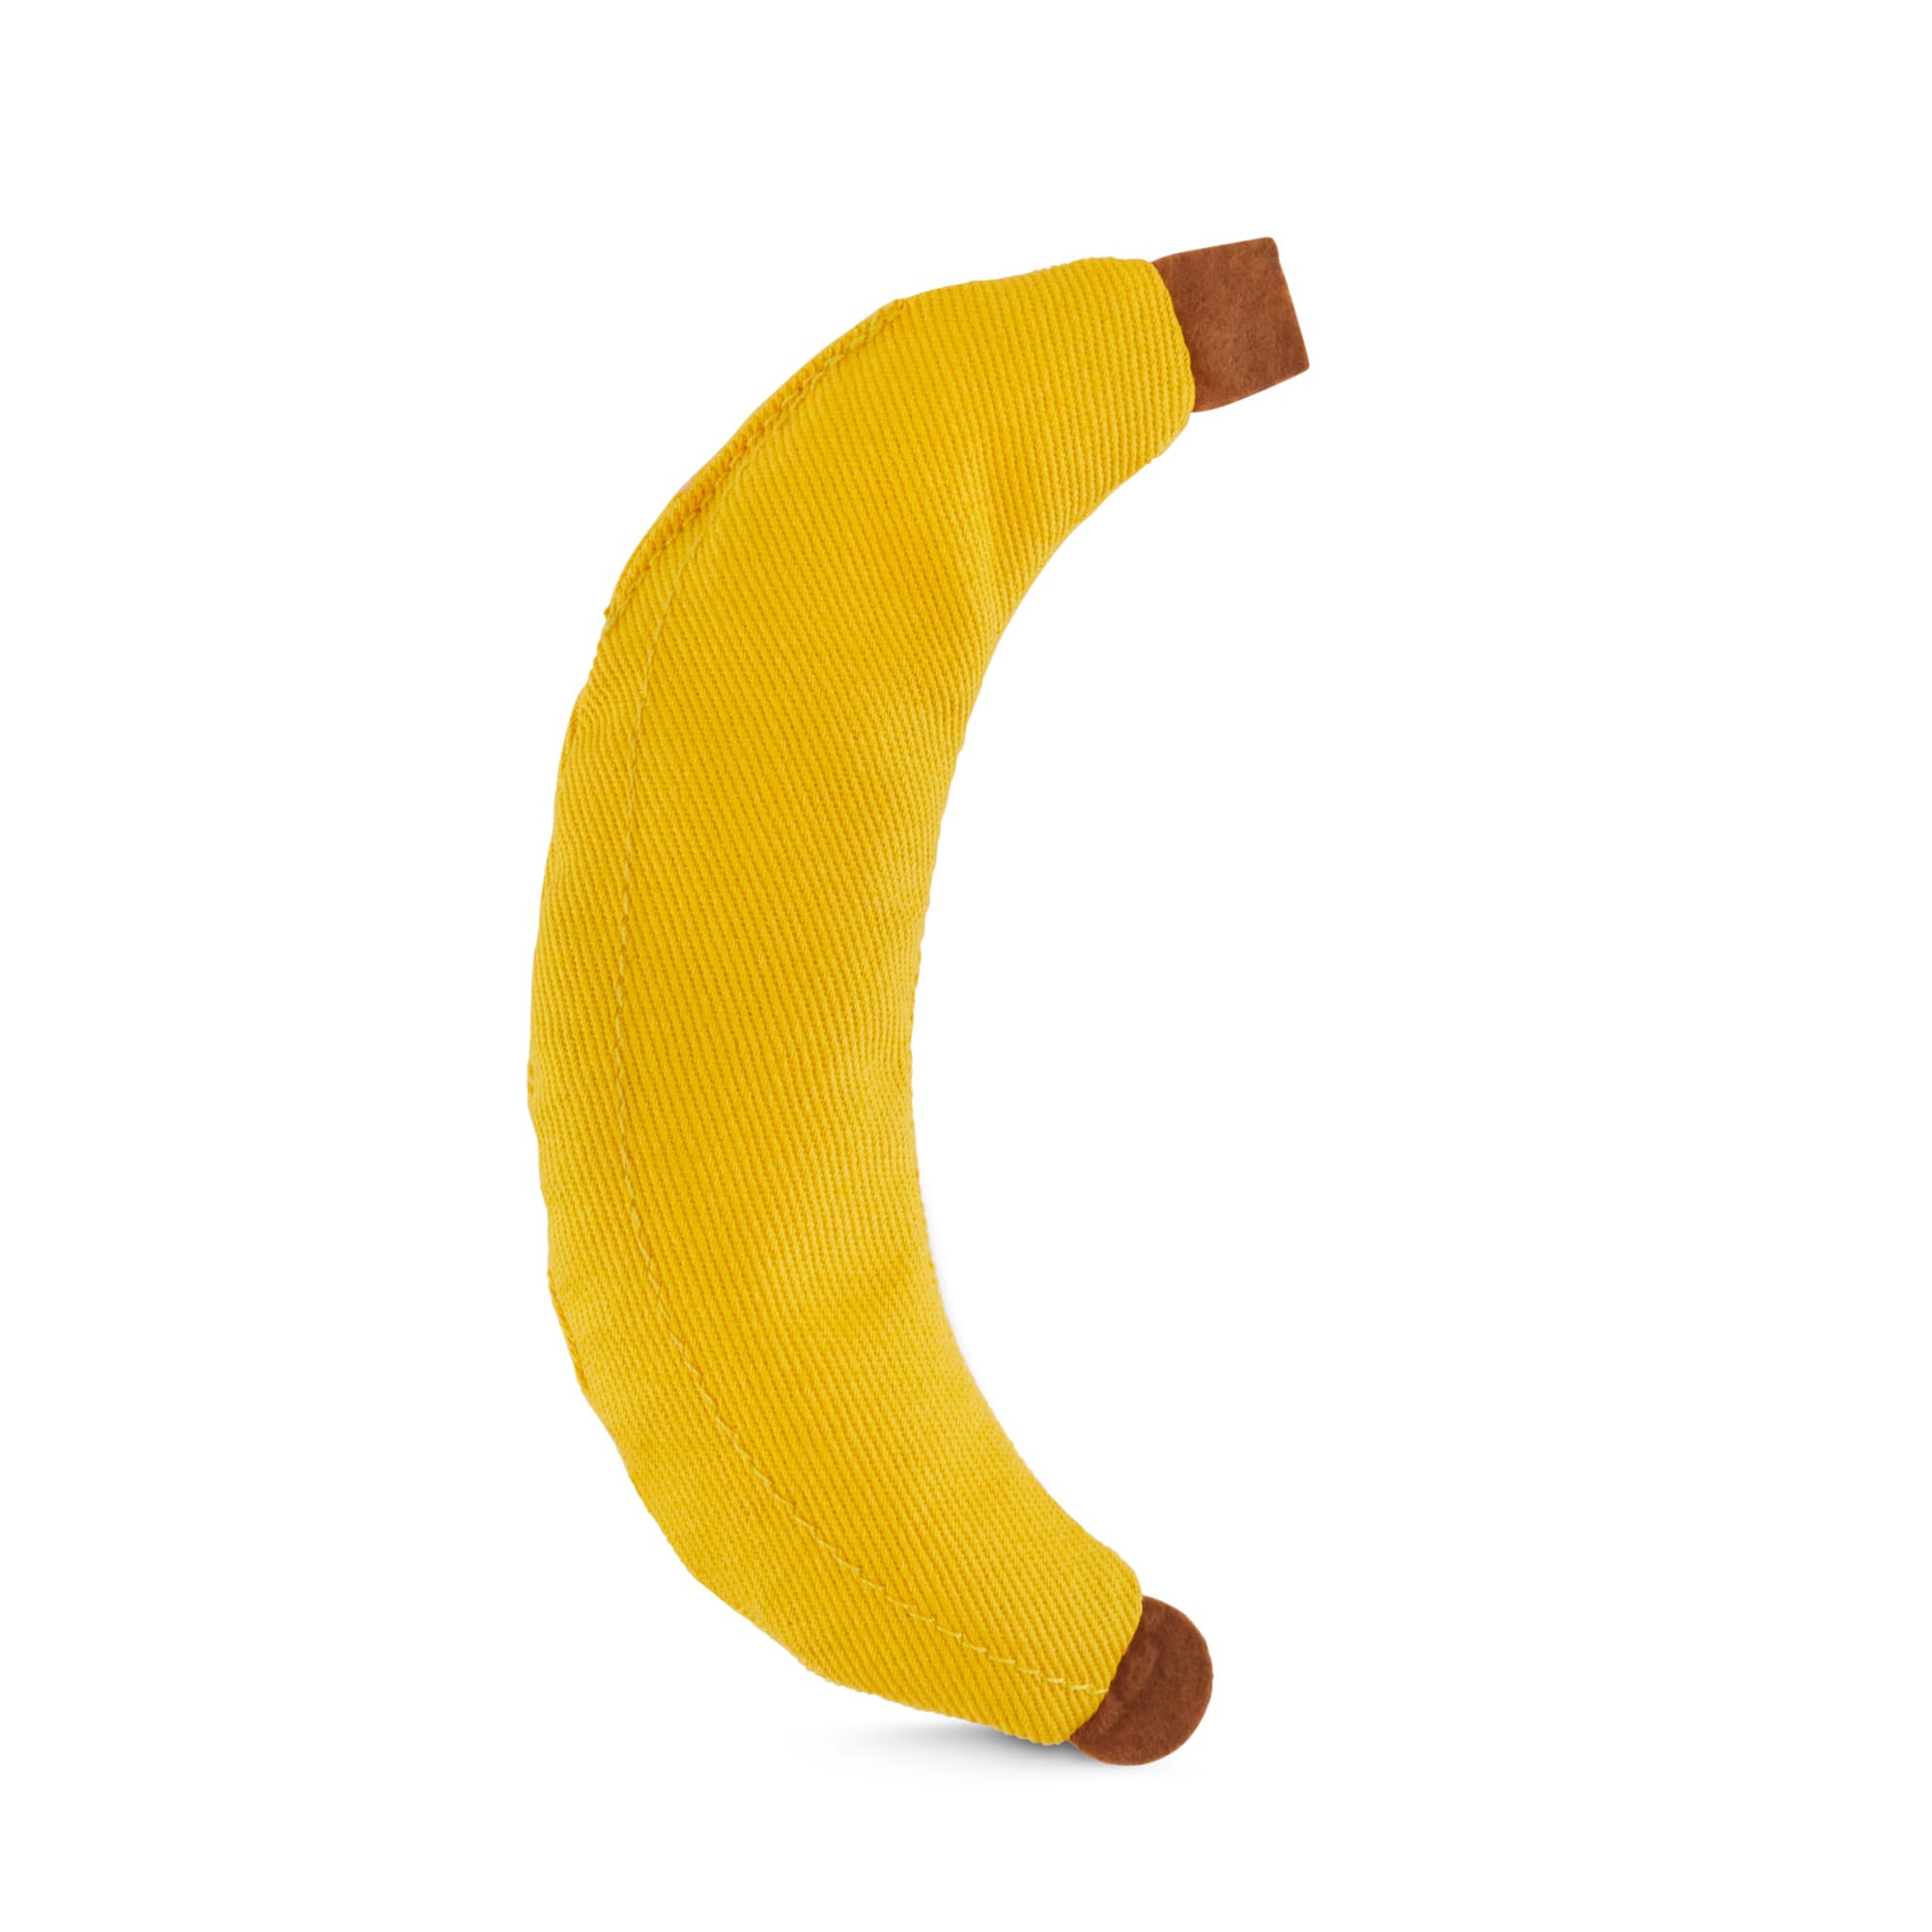 banana catnip toy